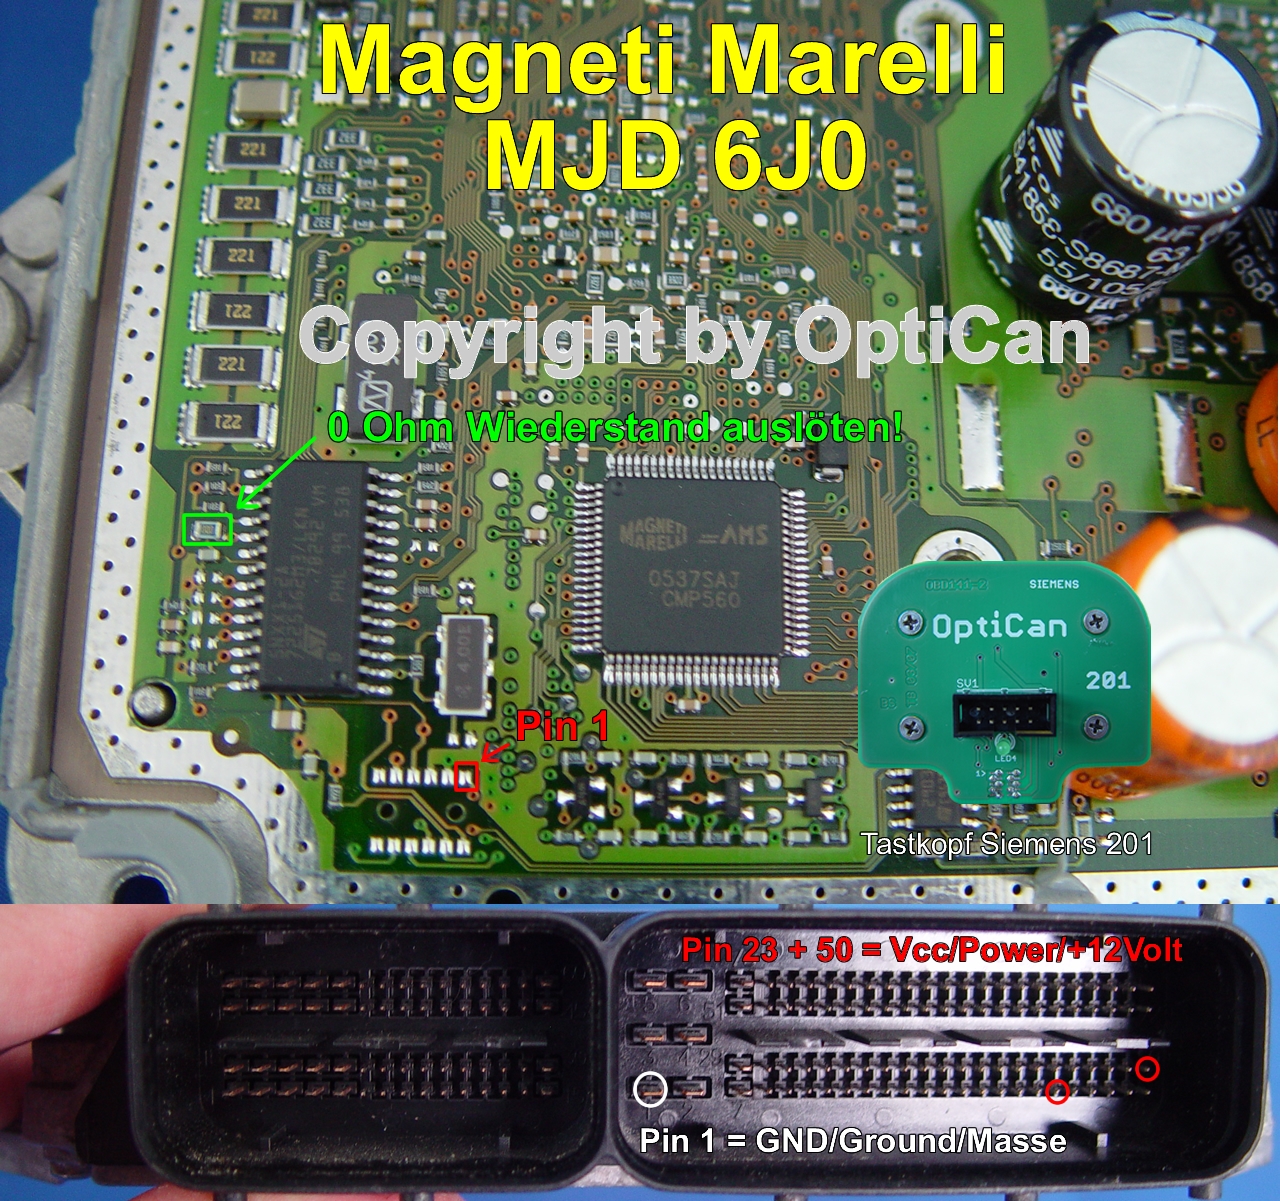 Magneti Marelli MJD 6J0.jpg